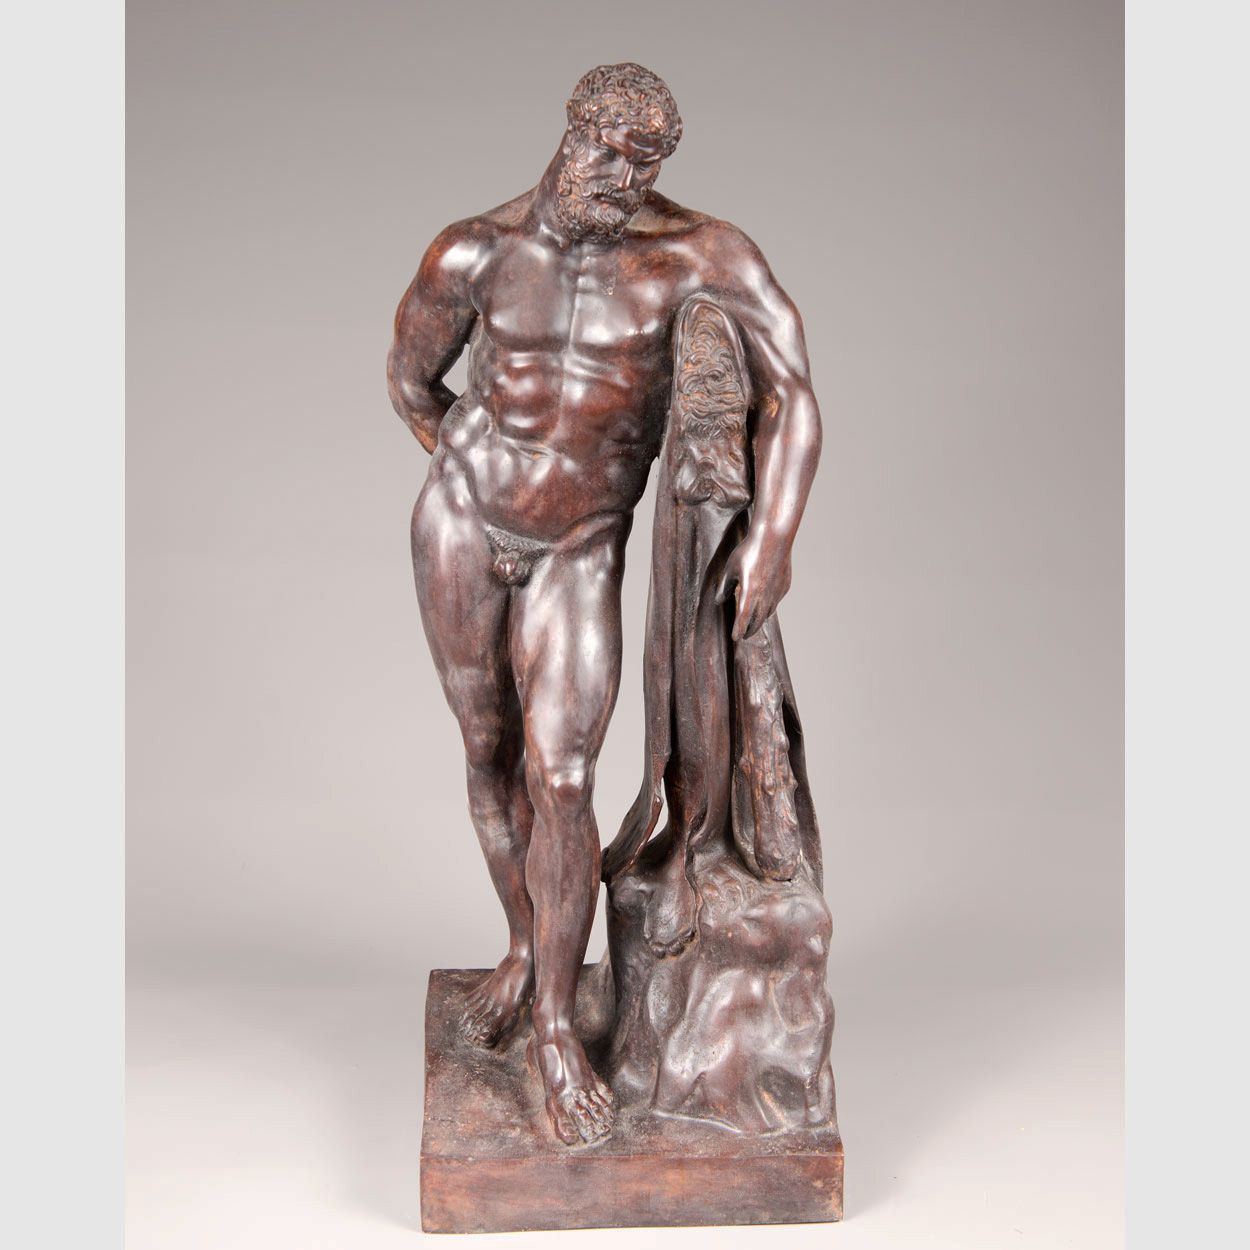 Farnese Hercules Hércules Farnesio, bronce fundido esculpido con fino acabado a &hellip;